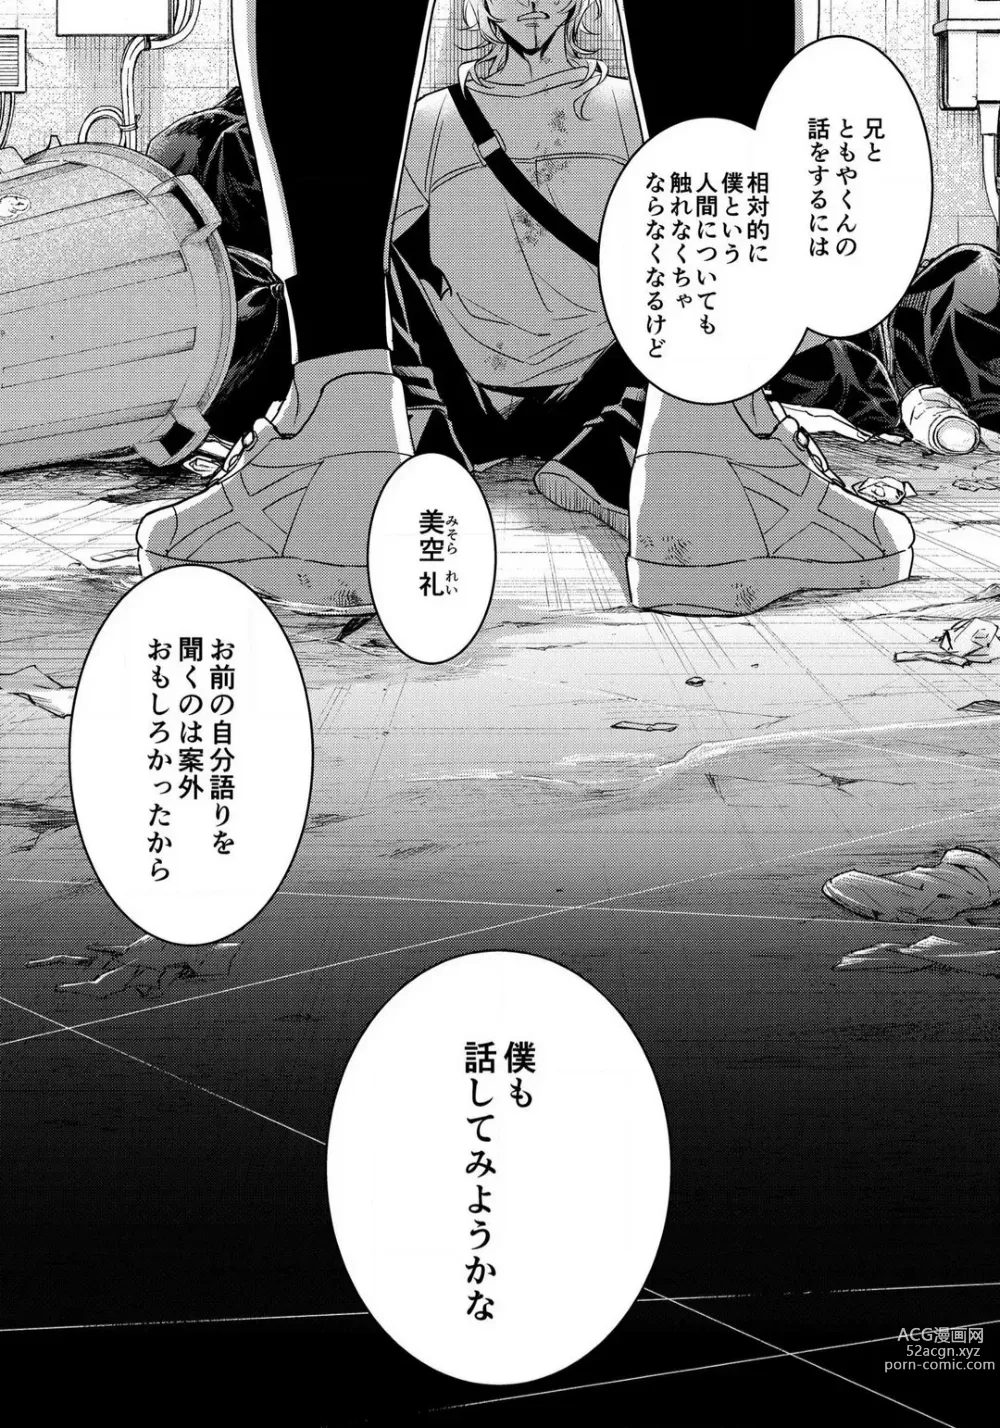 Page 3 of manga Ijimerare - Onna